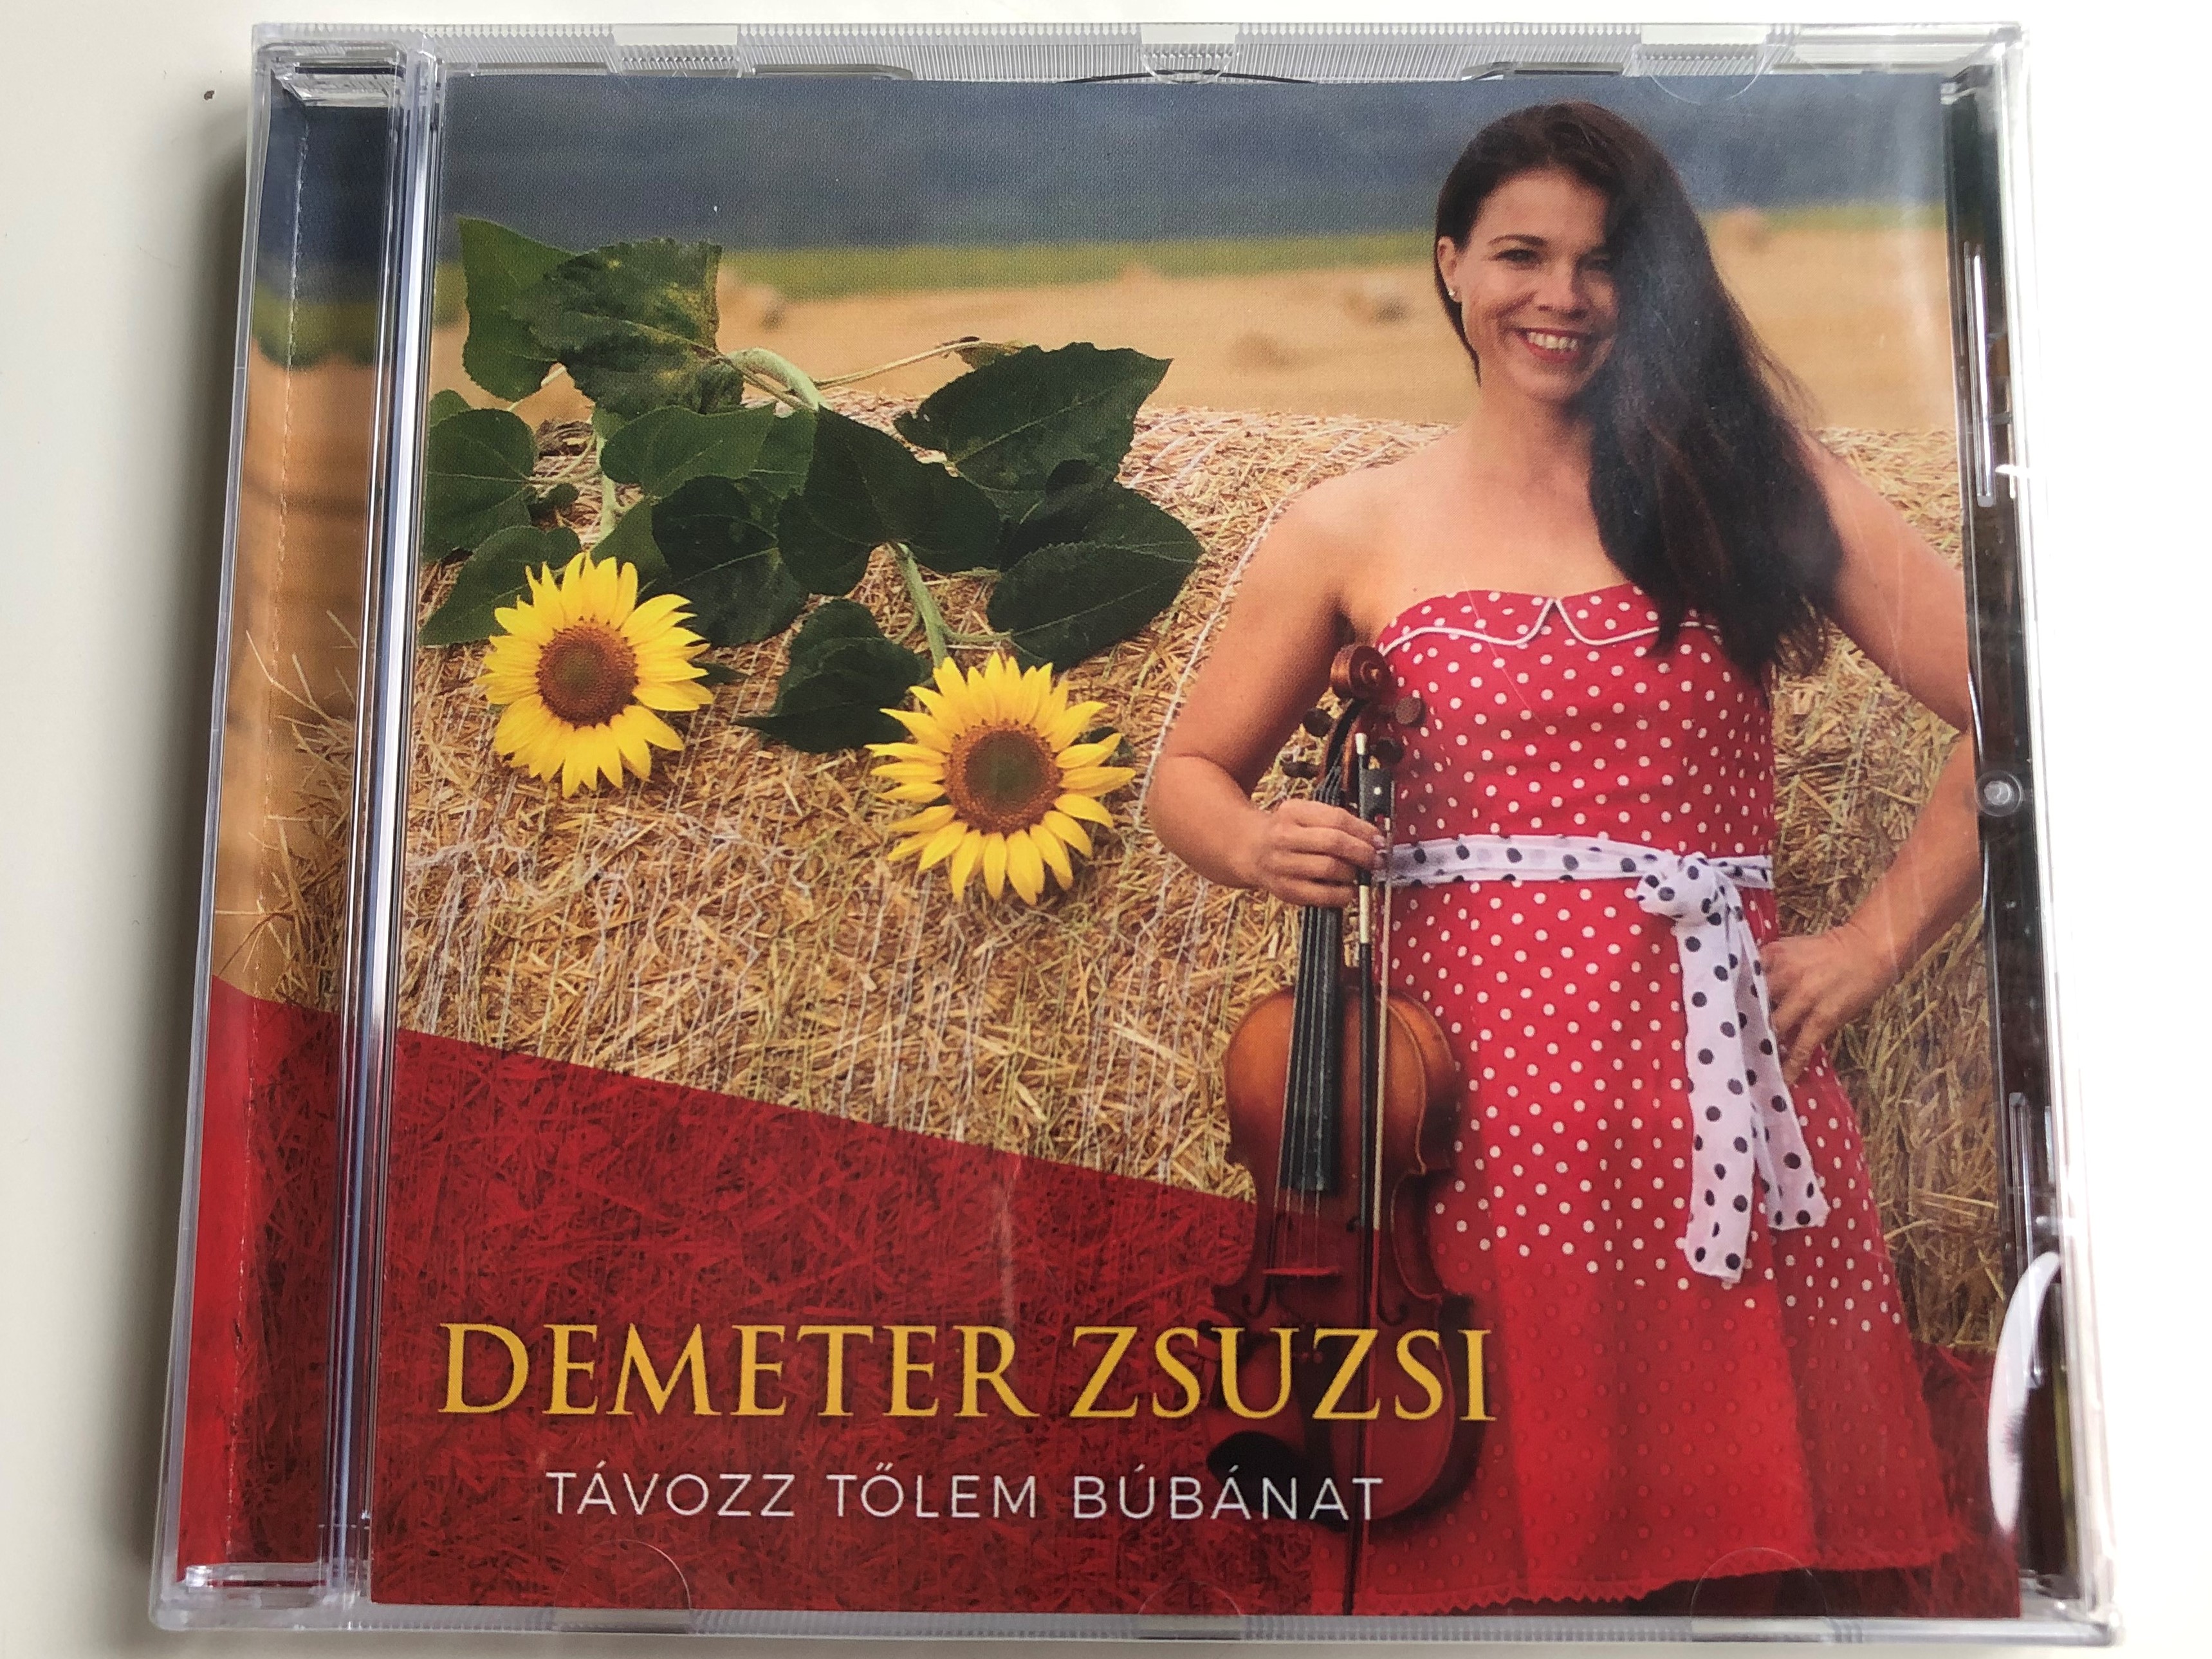 demeter-zsuzsi-tavozz-tolem-bubanat-trimedio-records-audio-cd-2019-lr041-1-.jpg